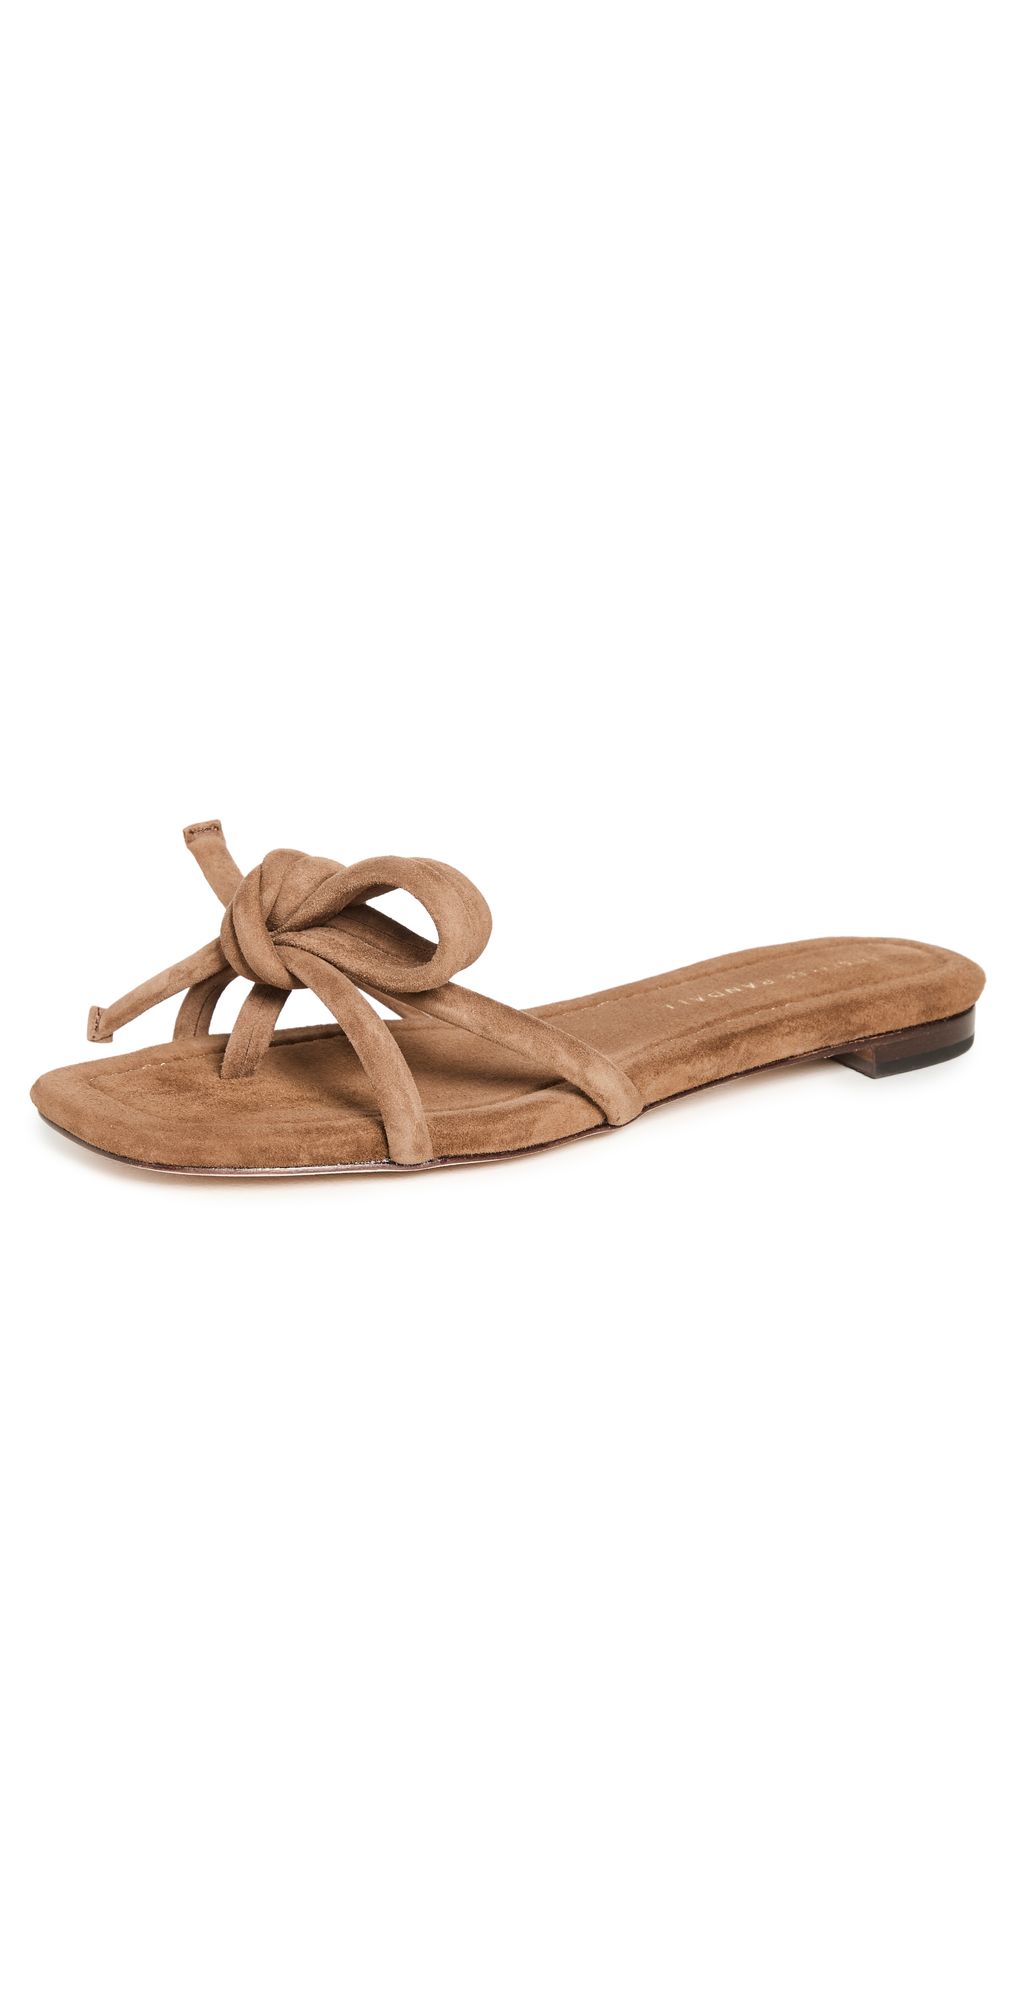 Loeffler Randall Leather Bow Flat Sandals | Shopbop